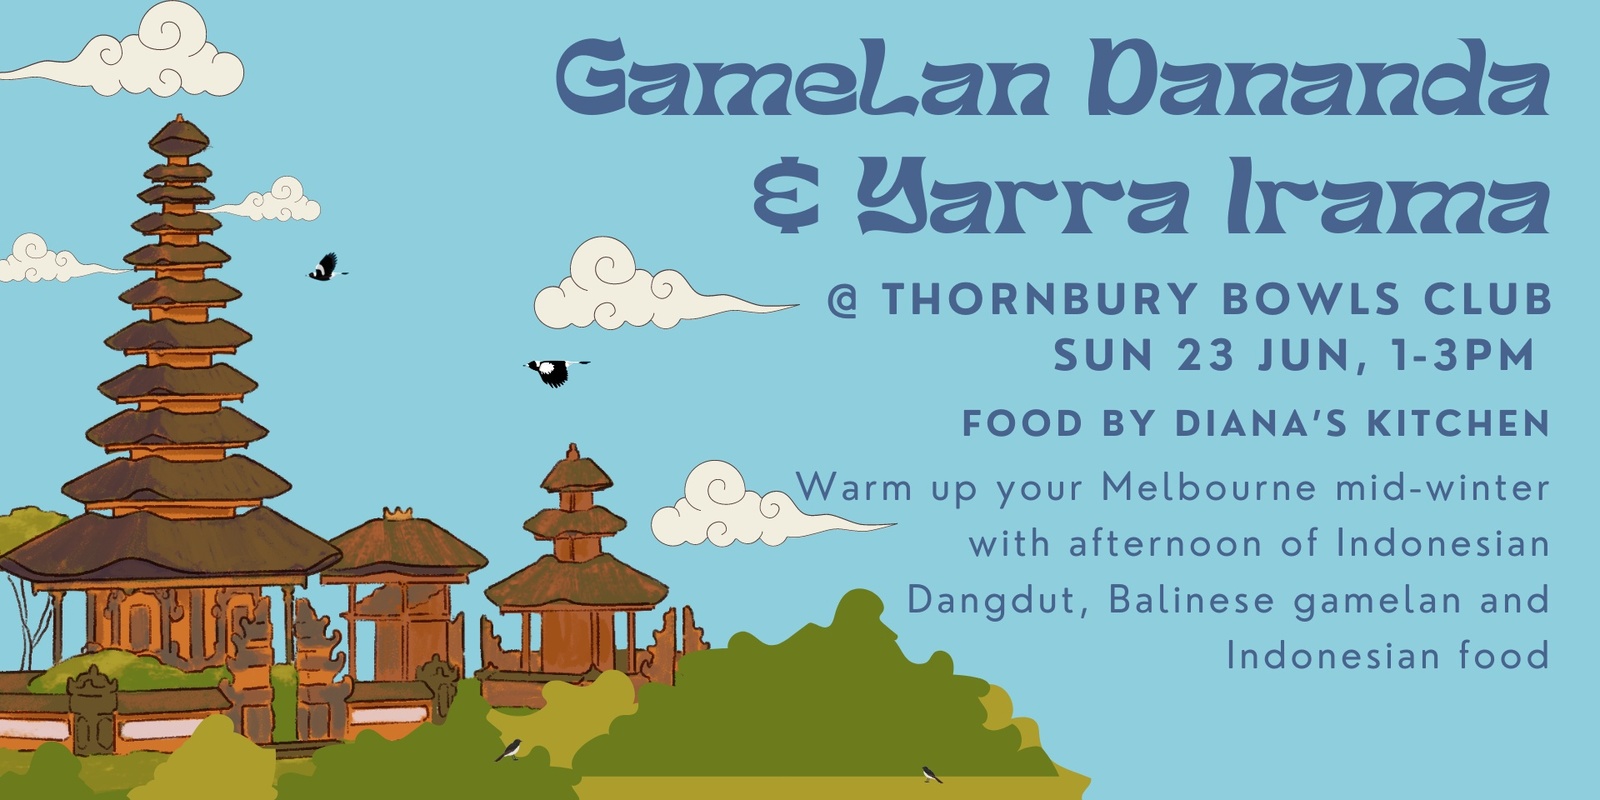 Banner image for PRESALES CLOSED - Gamelan DanAnda & Yarra Irama @ Thornbury Bowls Club - Warm up your winter with Balinese gamelan, Indonesian dangdut, and delicious Indonesian food